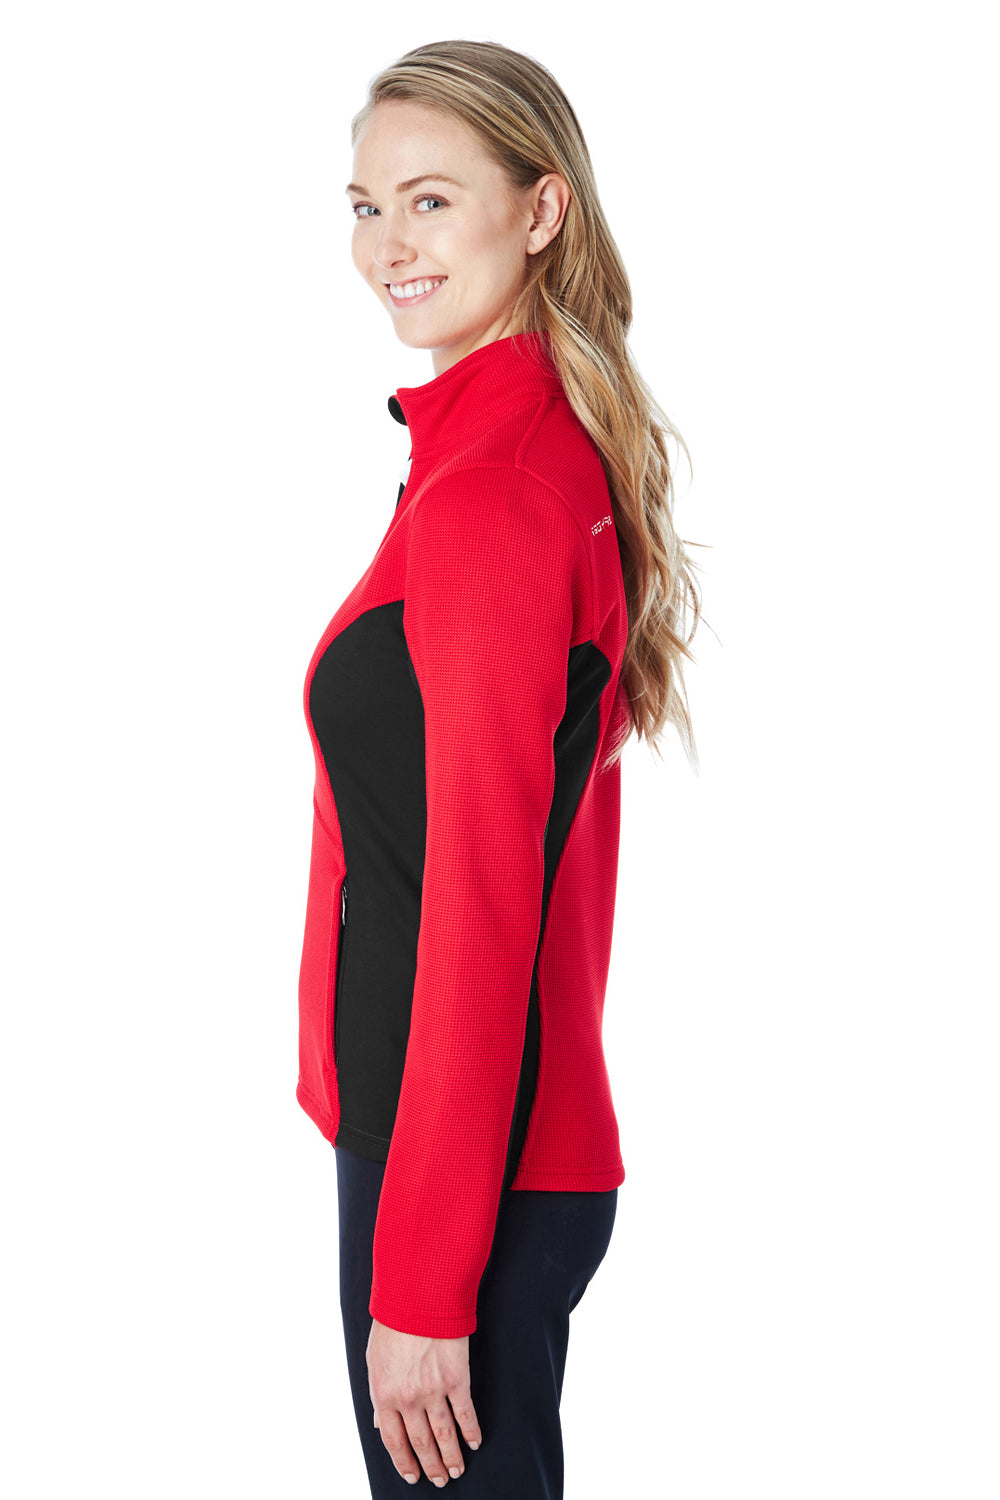 Spyder 187335 Womens Constant Full Zip Sweater Fleece Jacket Red Side